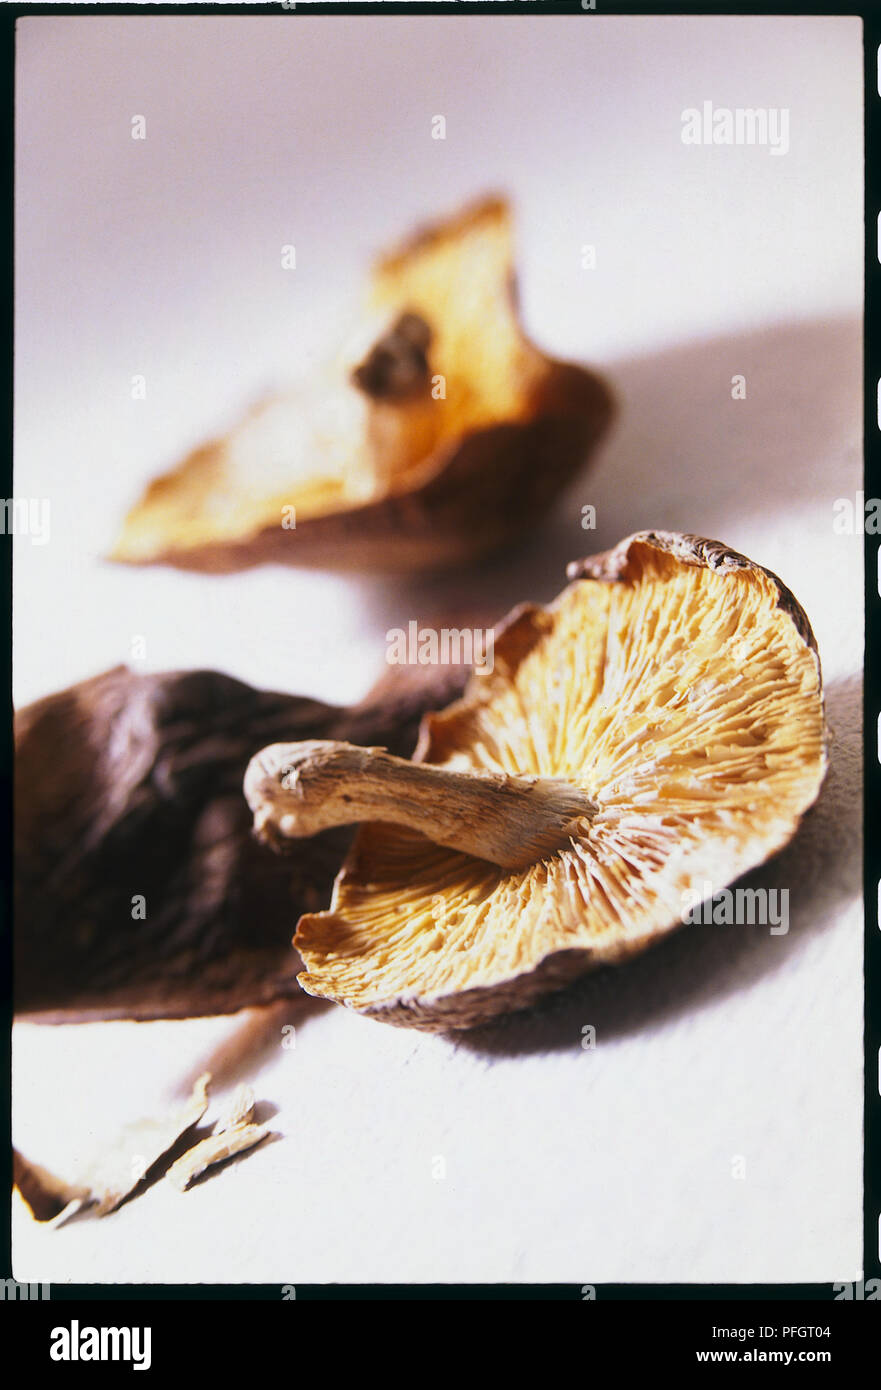 Dried shiitake mushrooms, defocused Stock Photo